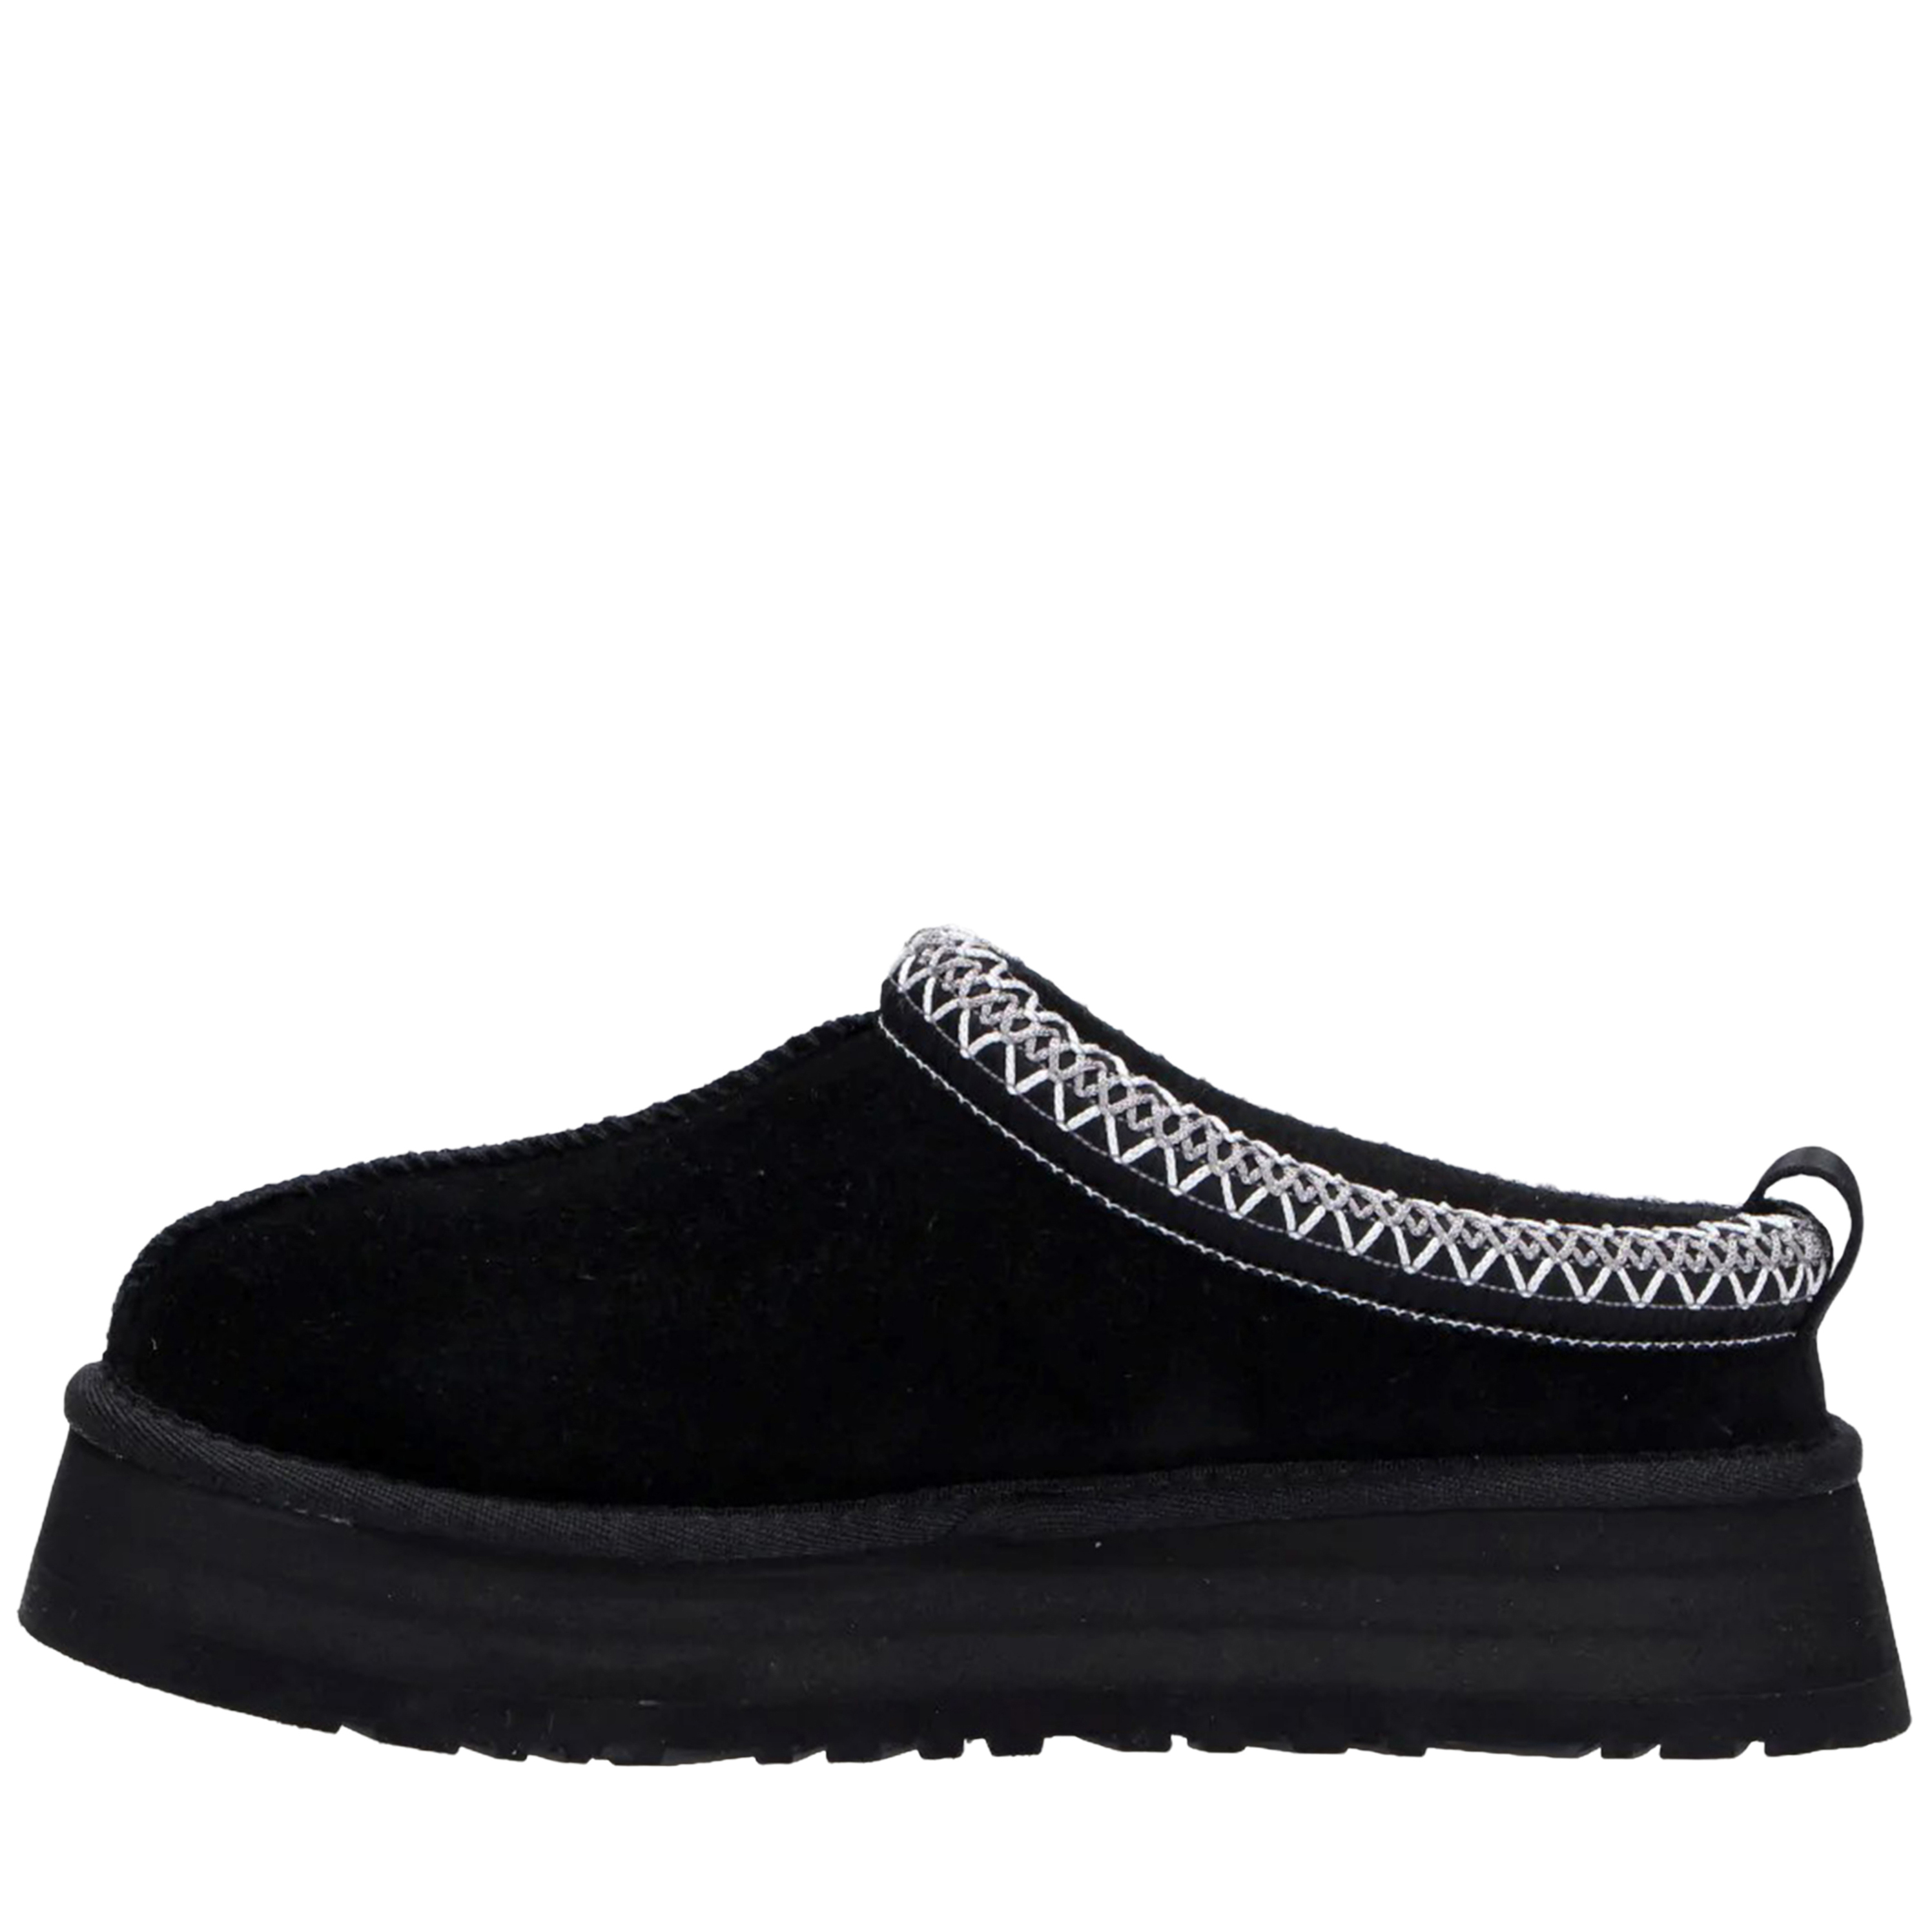 lied Speel Geestig UGG Tazz Women's Platform Slippers - Black, 6 US for sale online | eBay